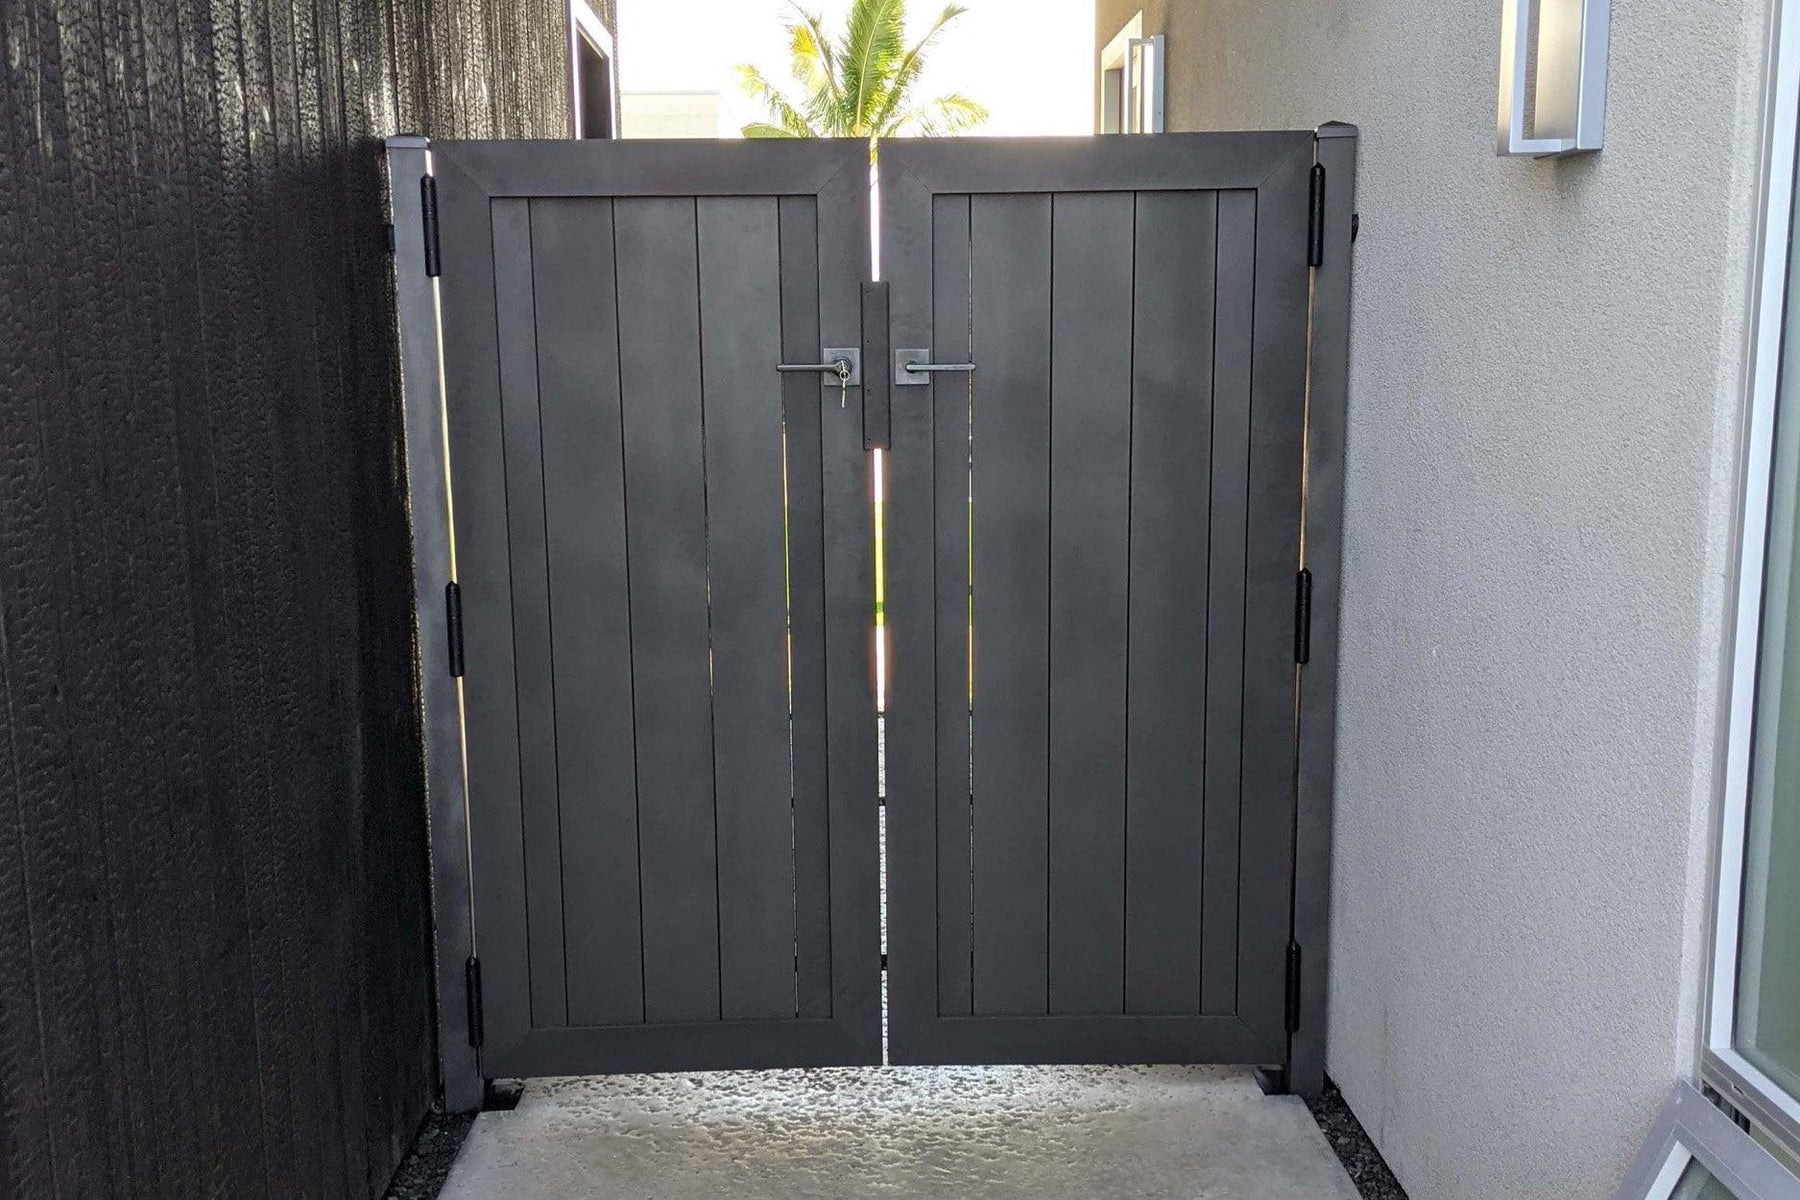 Heavy-Duty Commercial Gate Door Hinges - Waterson Multi-function Closer Hinge